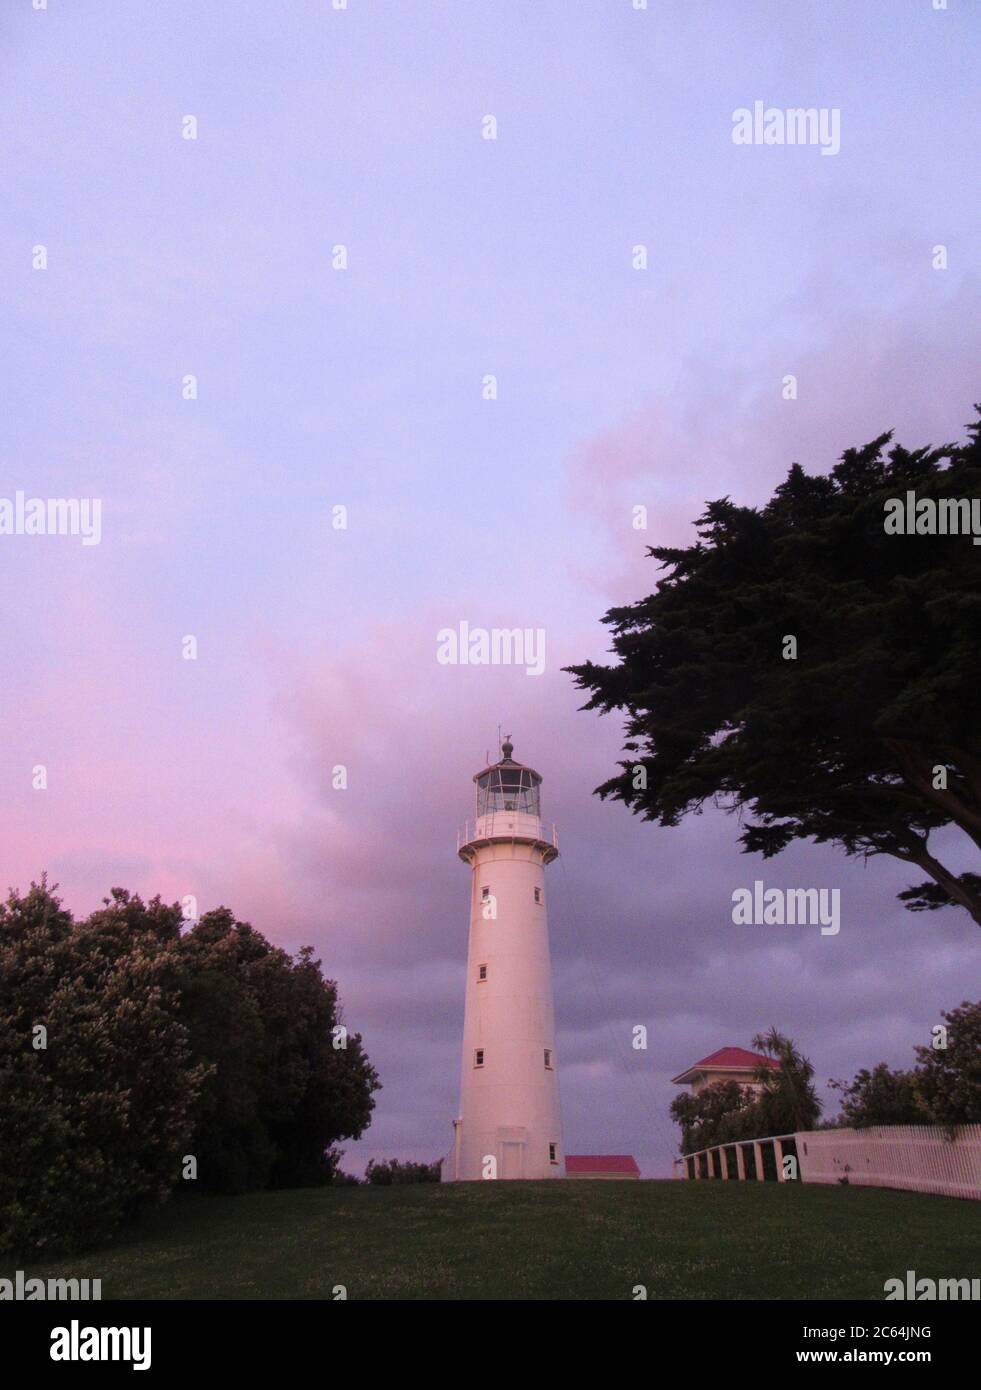 Lighthouse on Tiritiri Matangi Island in the Hauraki Gulf, New Zealand. During purple colored sunset. Stock Photo